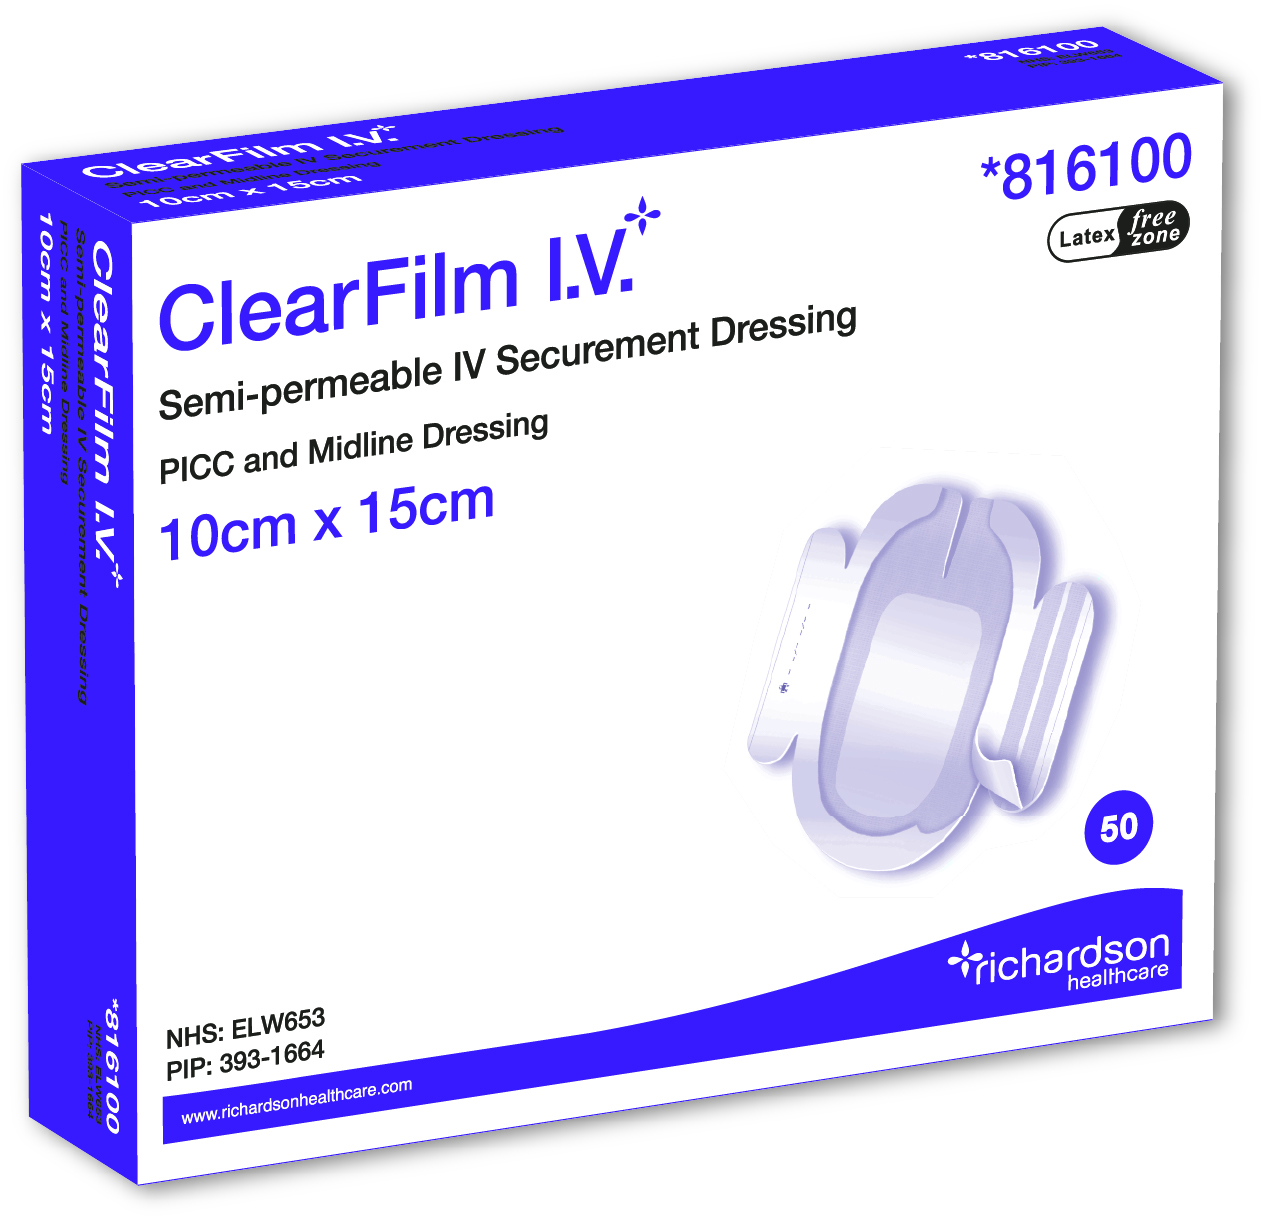 ClearFilm IV